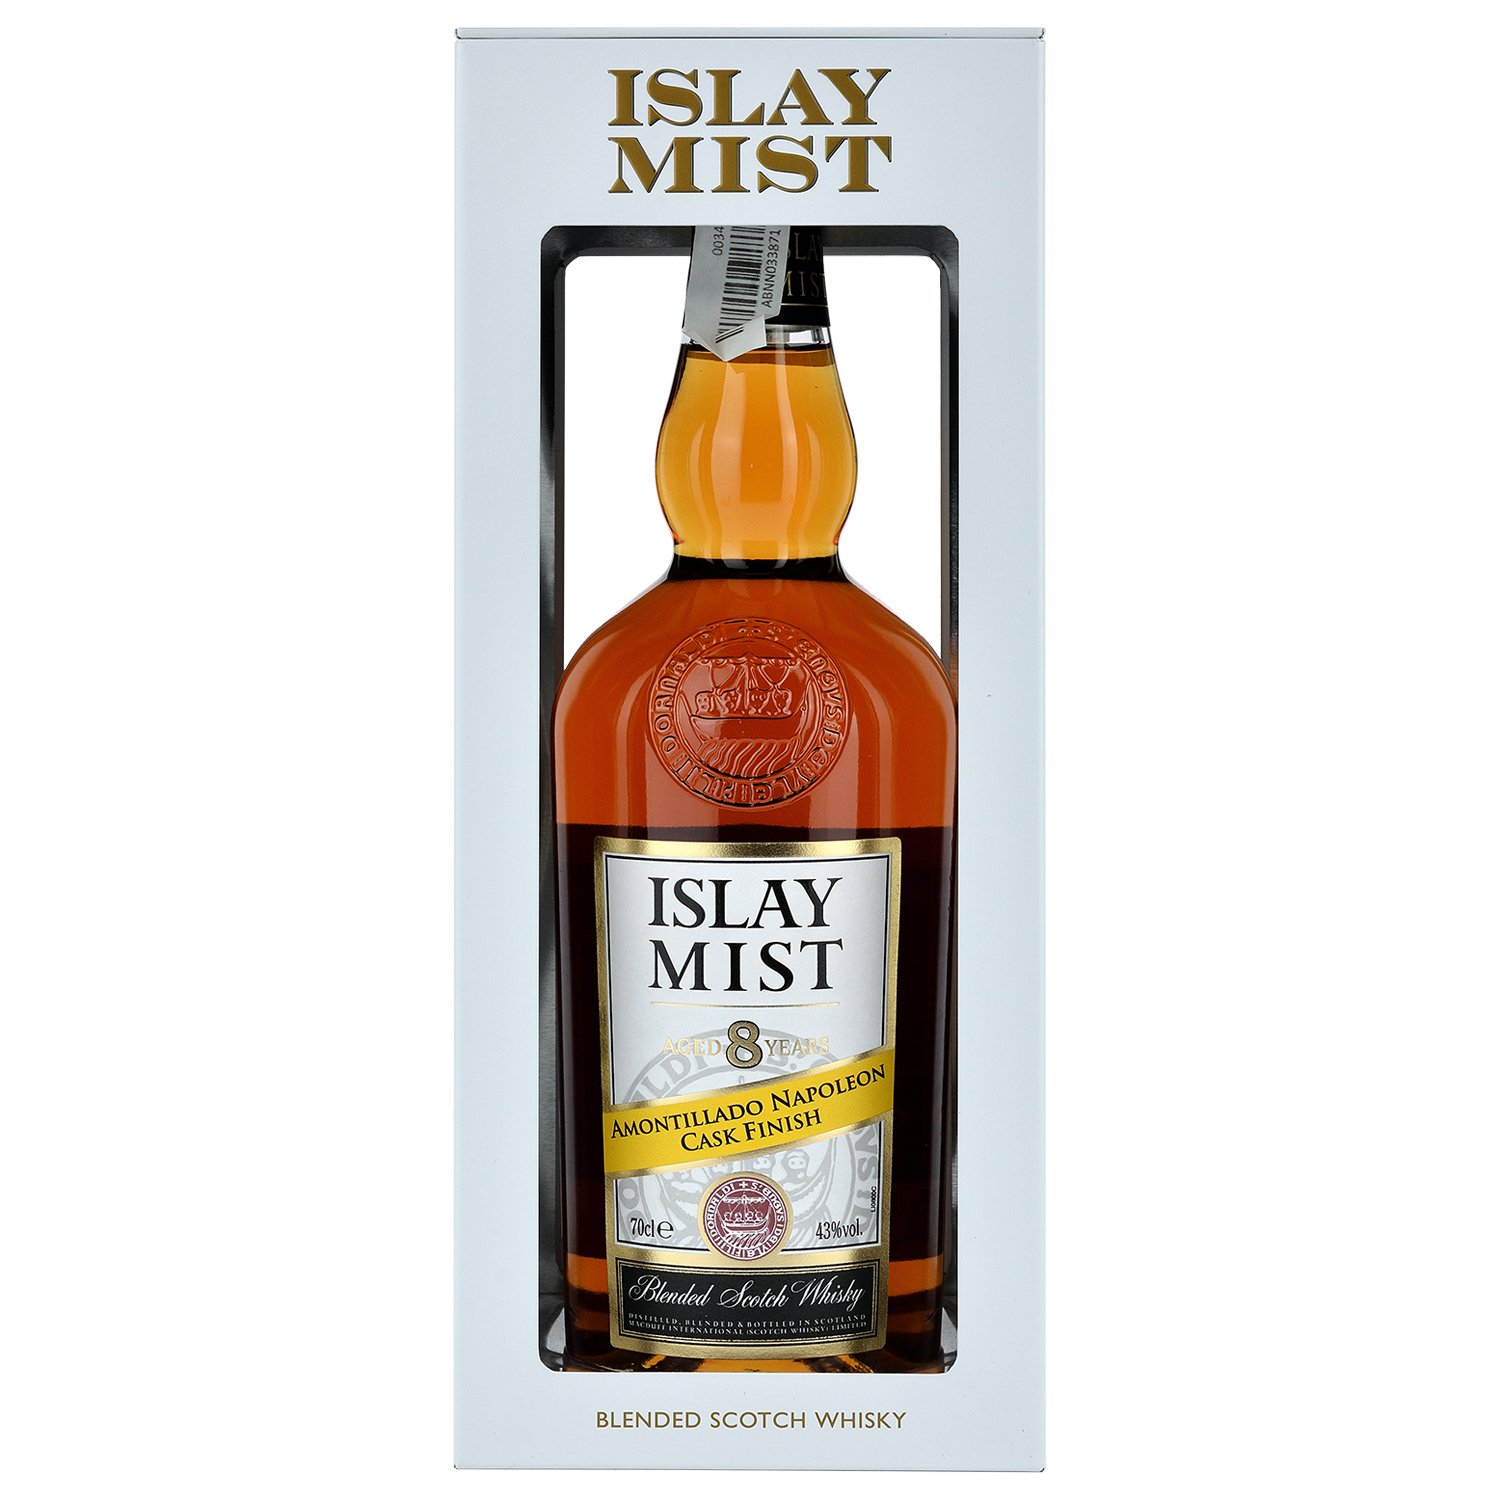 Виски Islay Mist Amontillado Napoleon Cask Finish Blended Scotch Whisky 8 yo, 43%, 0,7 л - фото 1